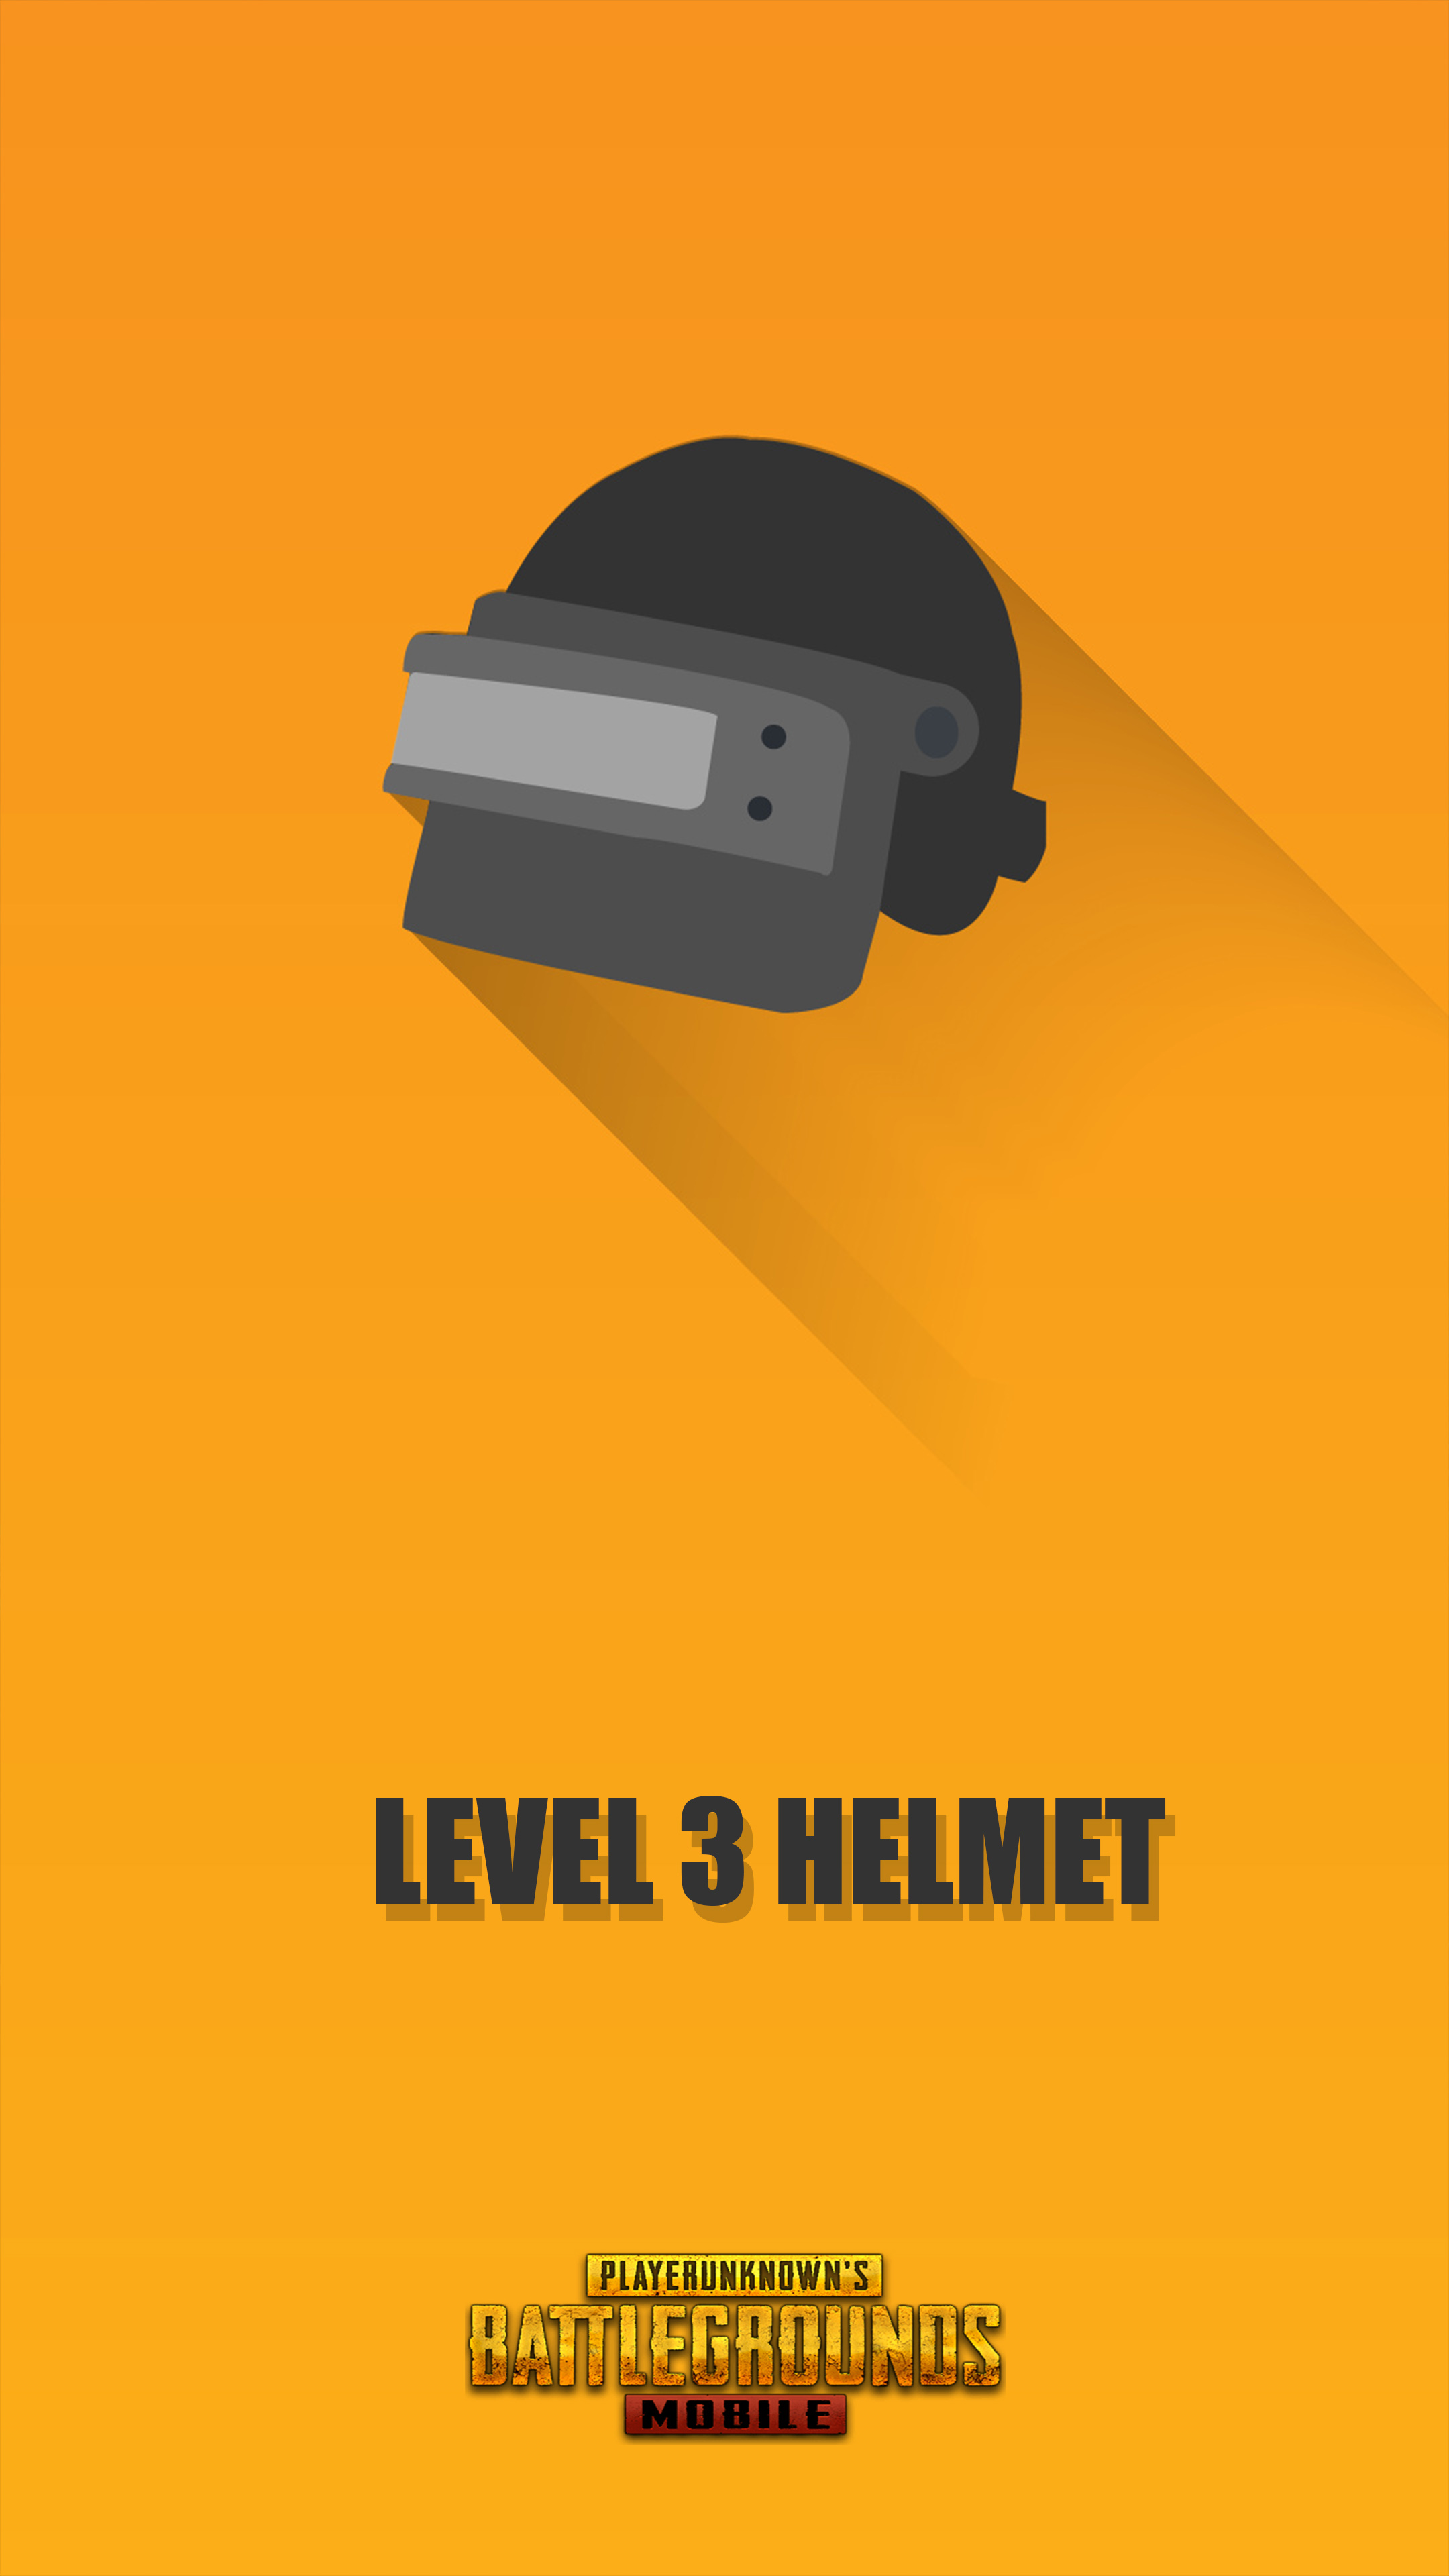 Download PUBG Mobile Helmet Level 3 Minimal Free Pure 4K Ultra HD